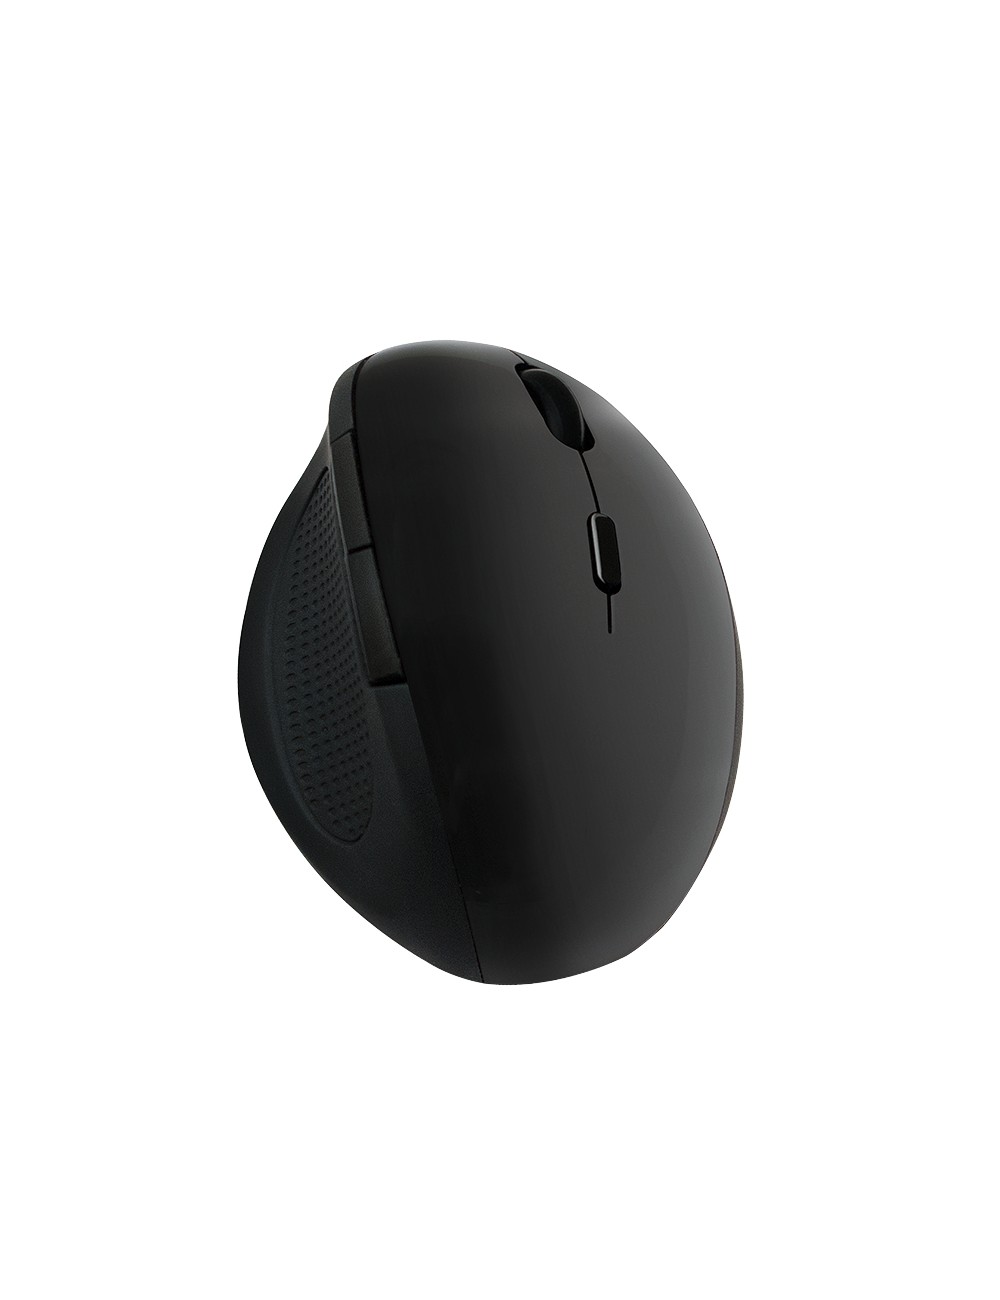 mouse-logilink-wireless-ergonomic-24ghz-black-id0139-1.jpg